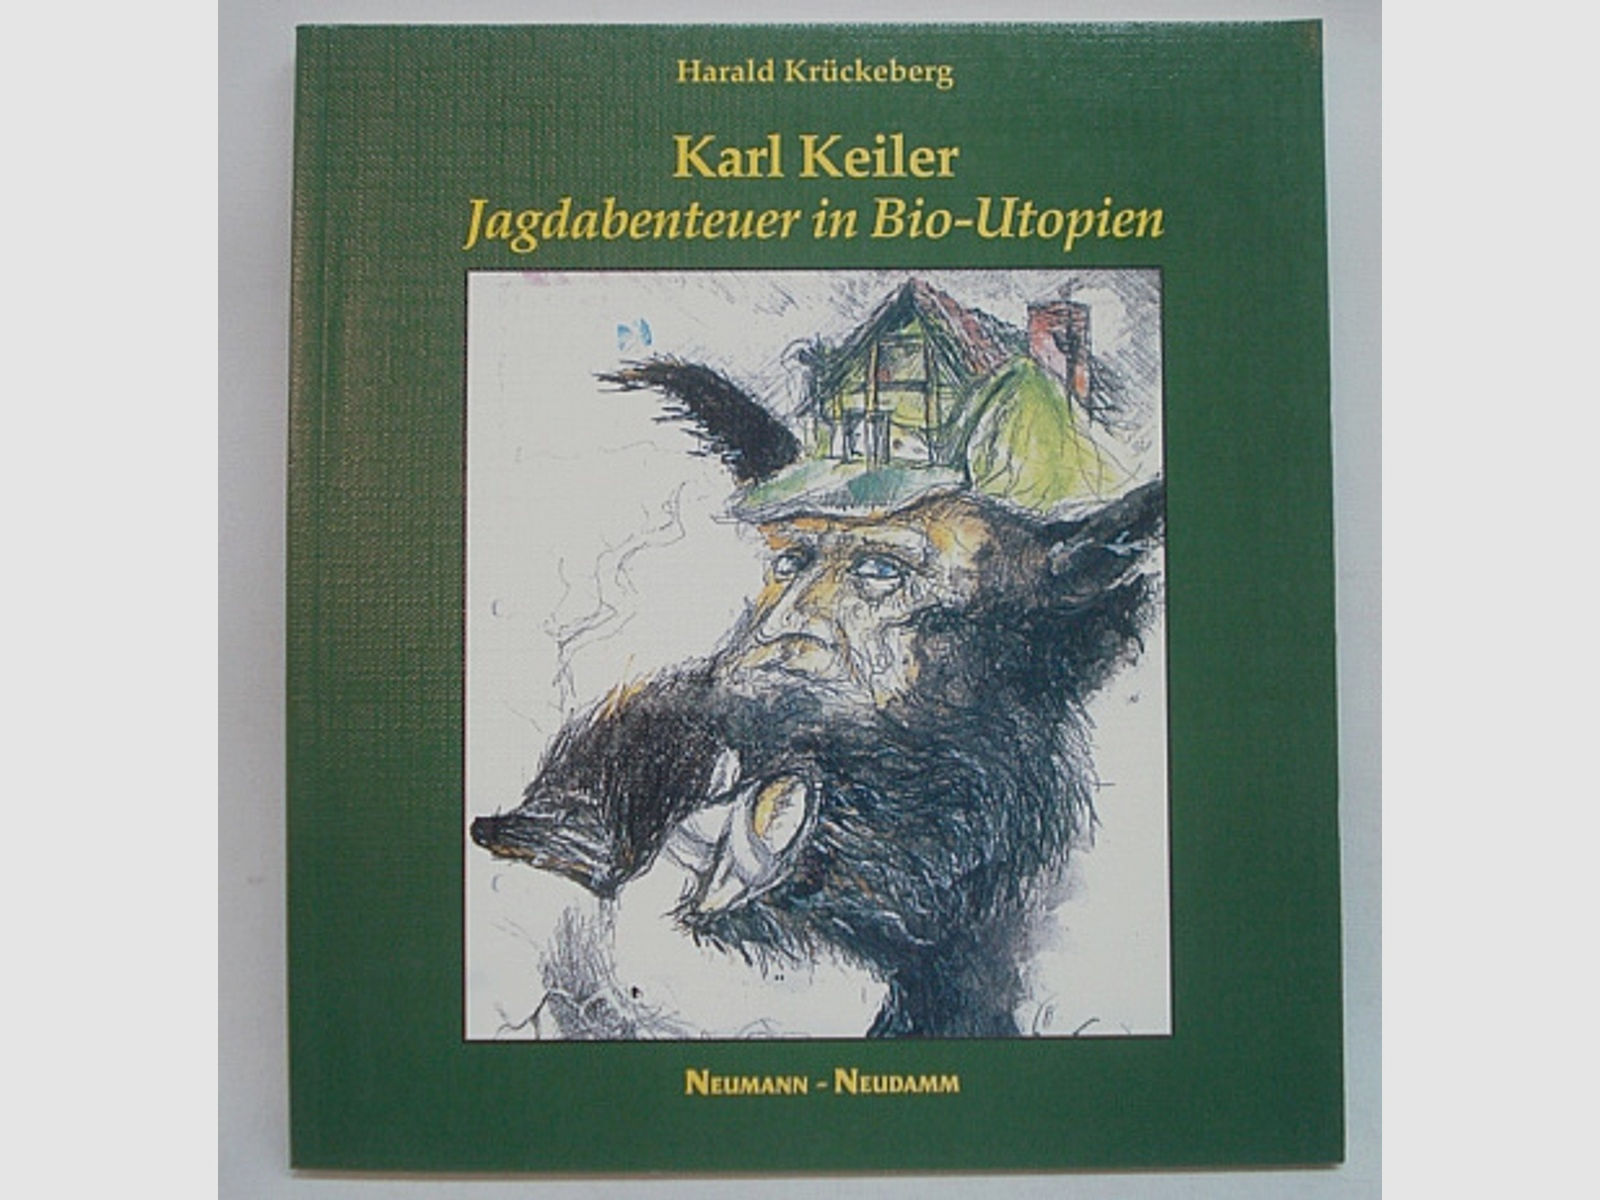 Buch Karl Keiler-Jagden - in Bio-Utopien